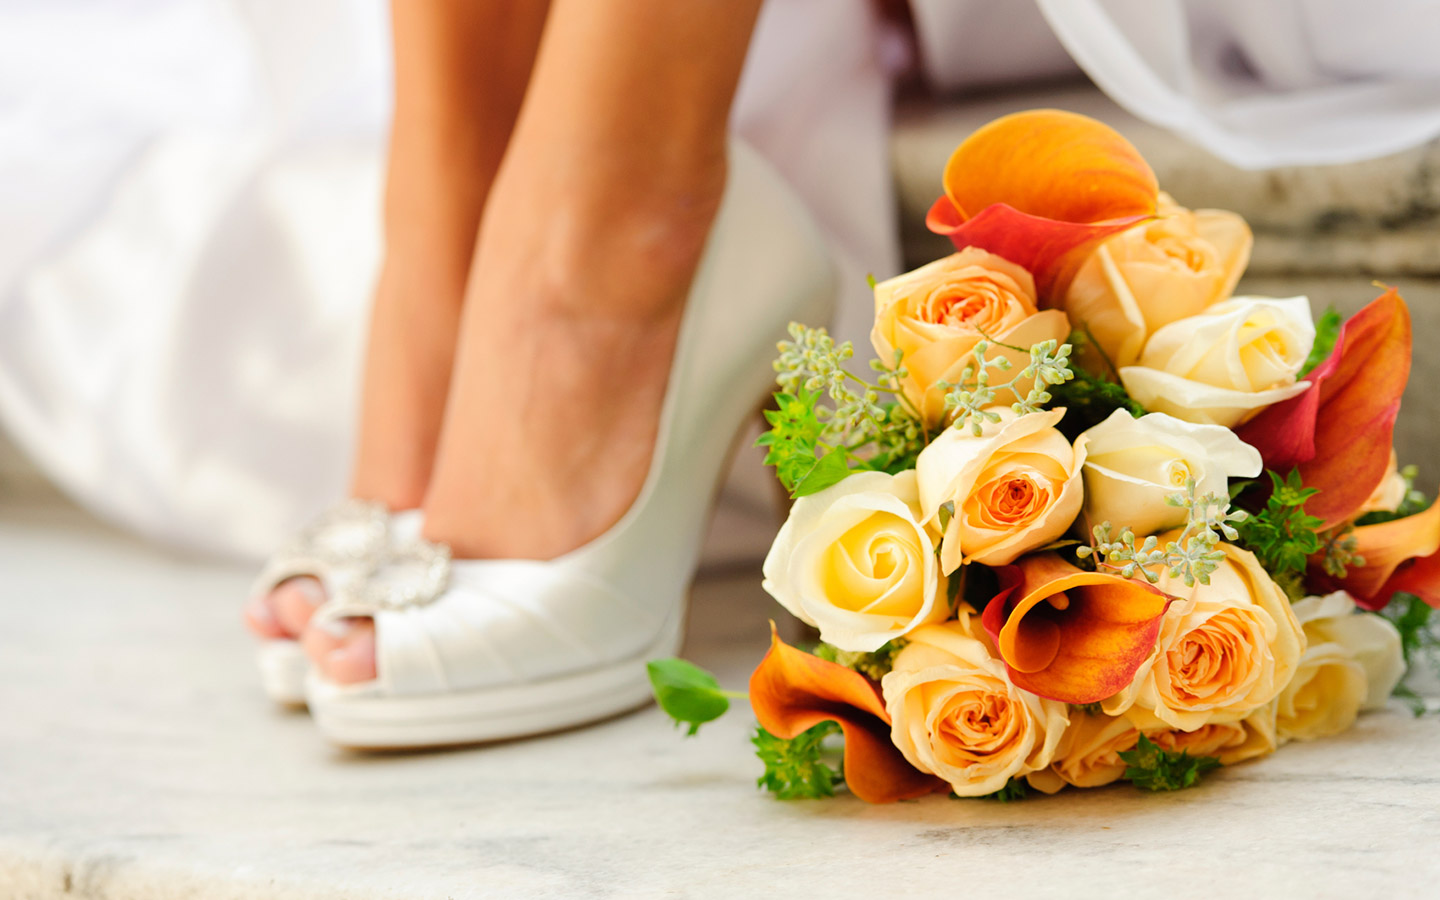 Wedding_Shoes_Bouquet_iStock_1440x900.jpg